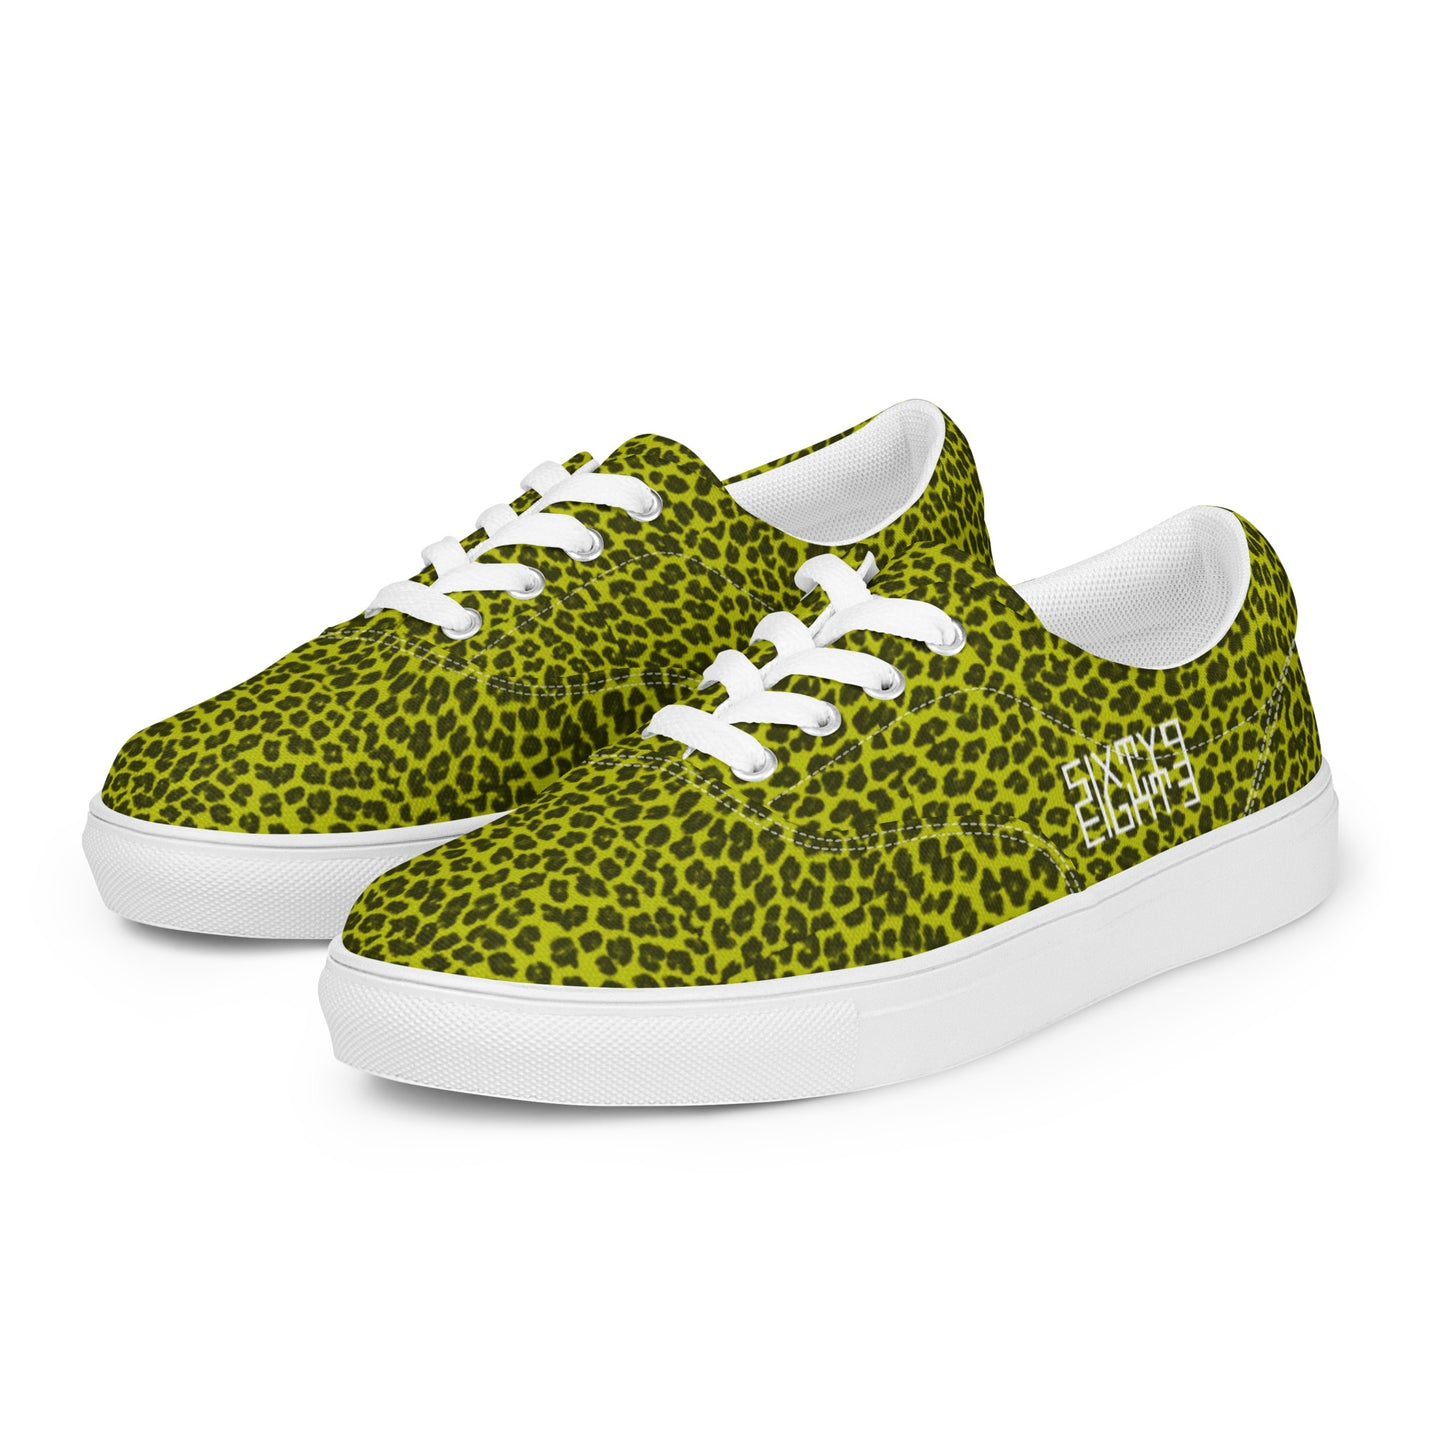 Sixty Eight 93 Logo White Cheetah Black Lemonade Women's Low Top Shoes